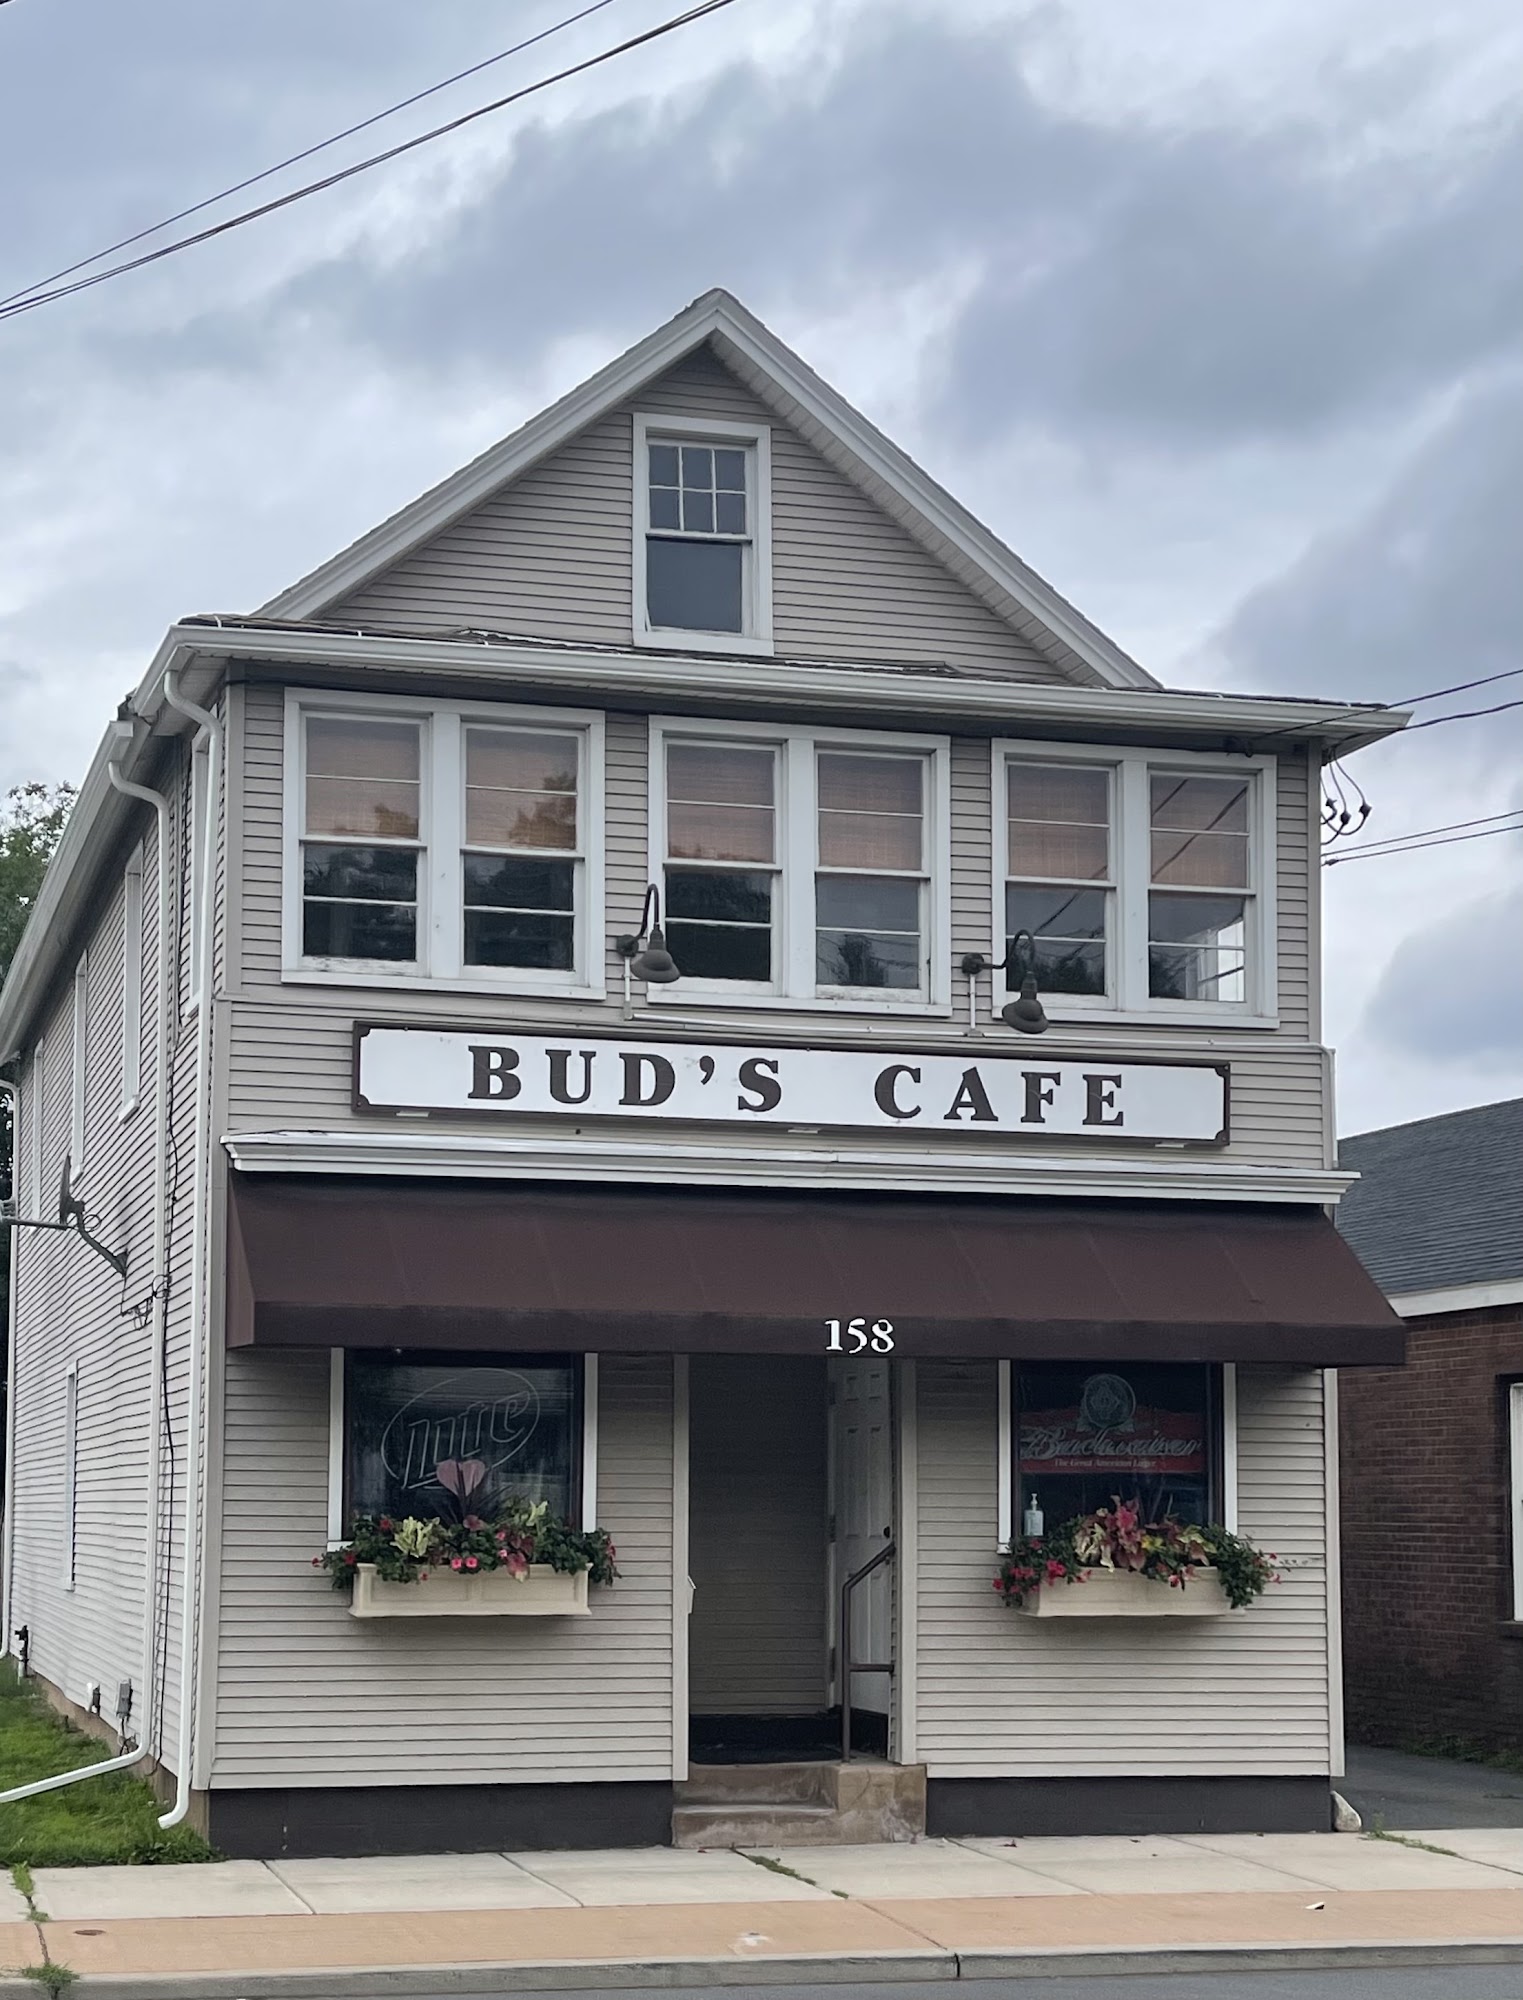 Bud's Cafe